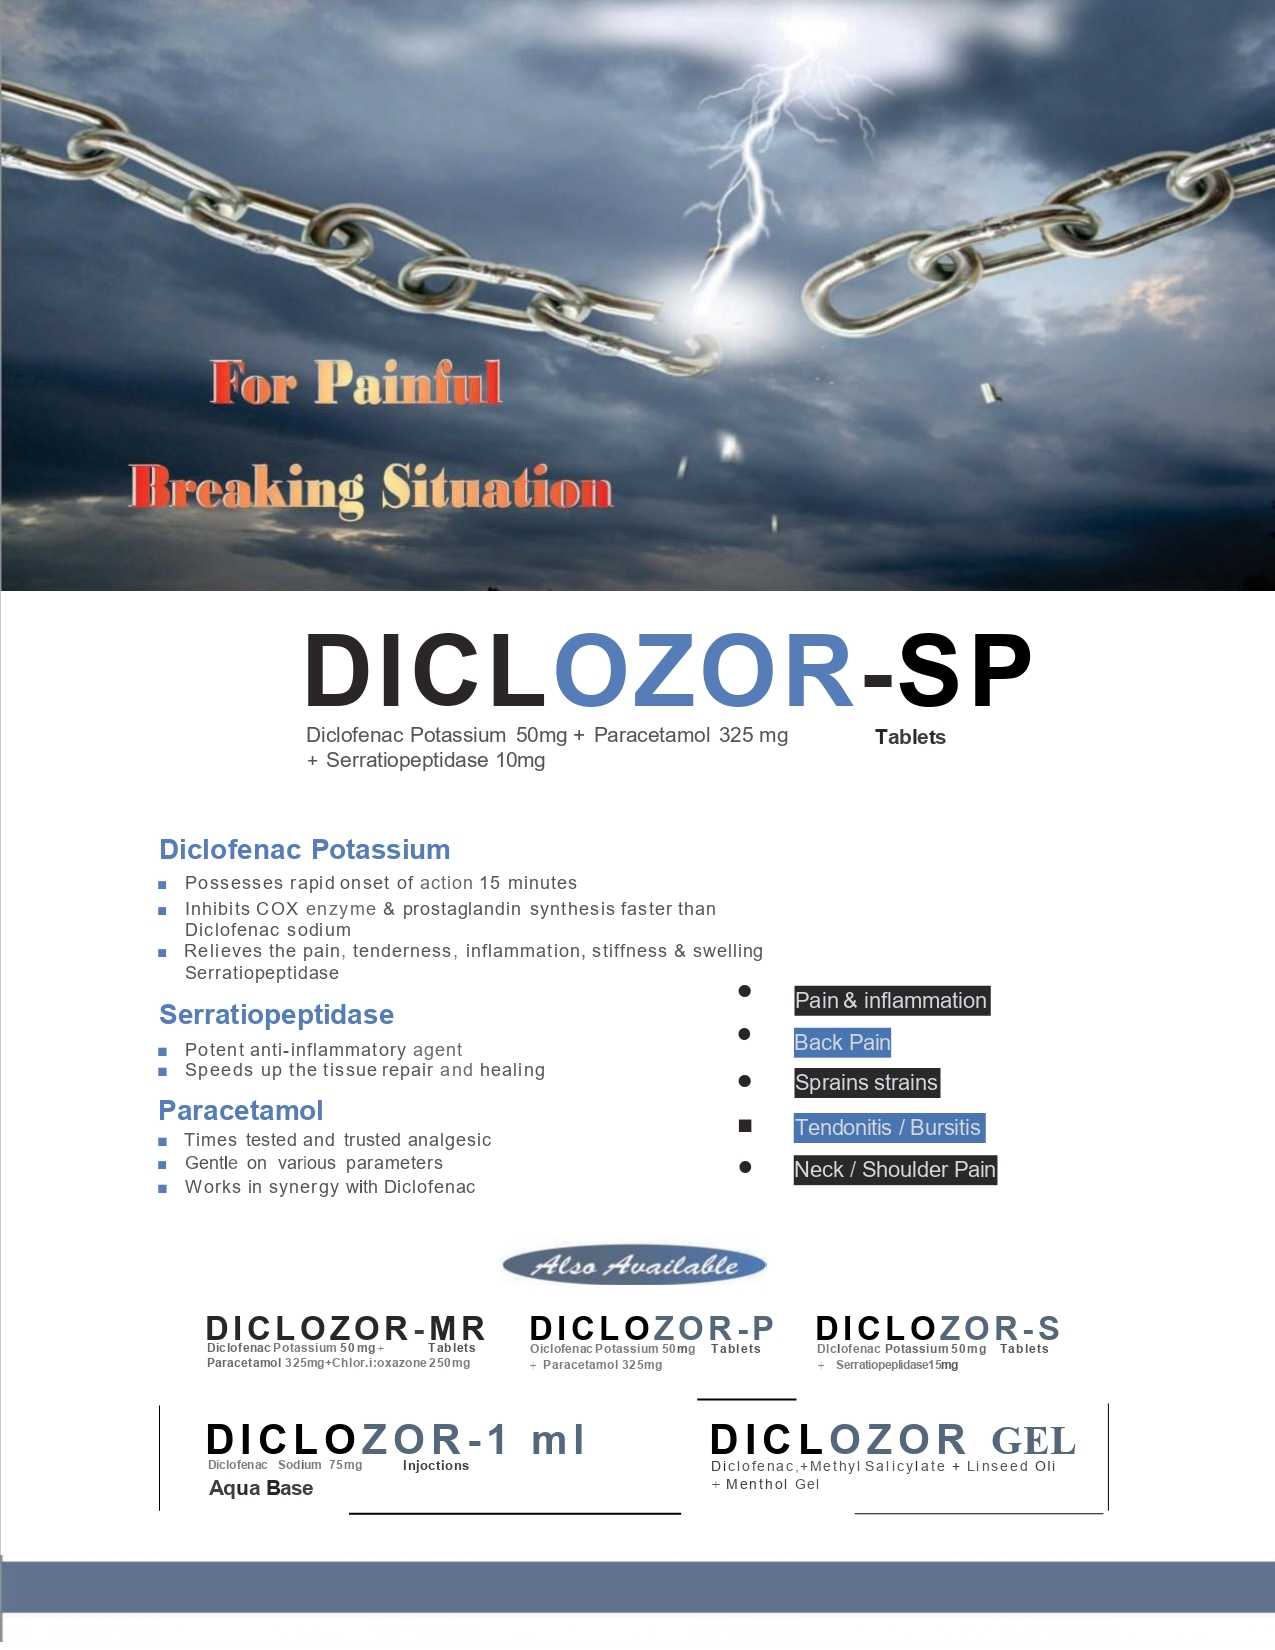 Diclozor-S